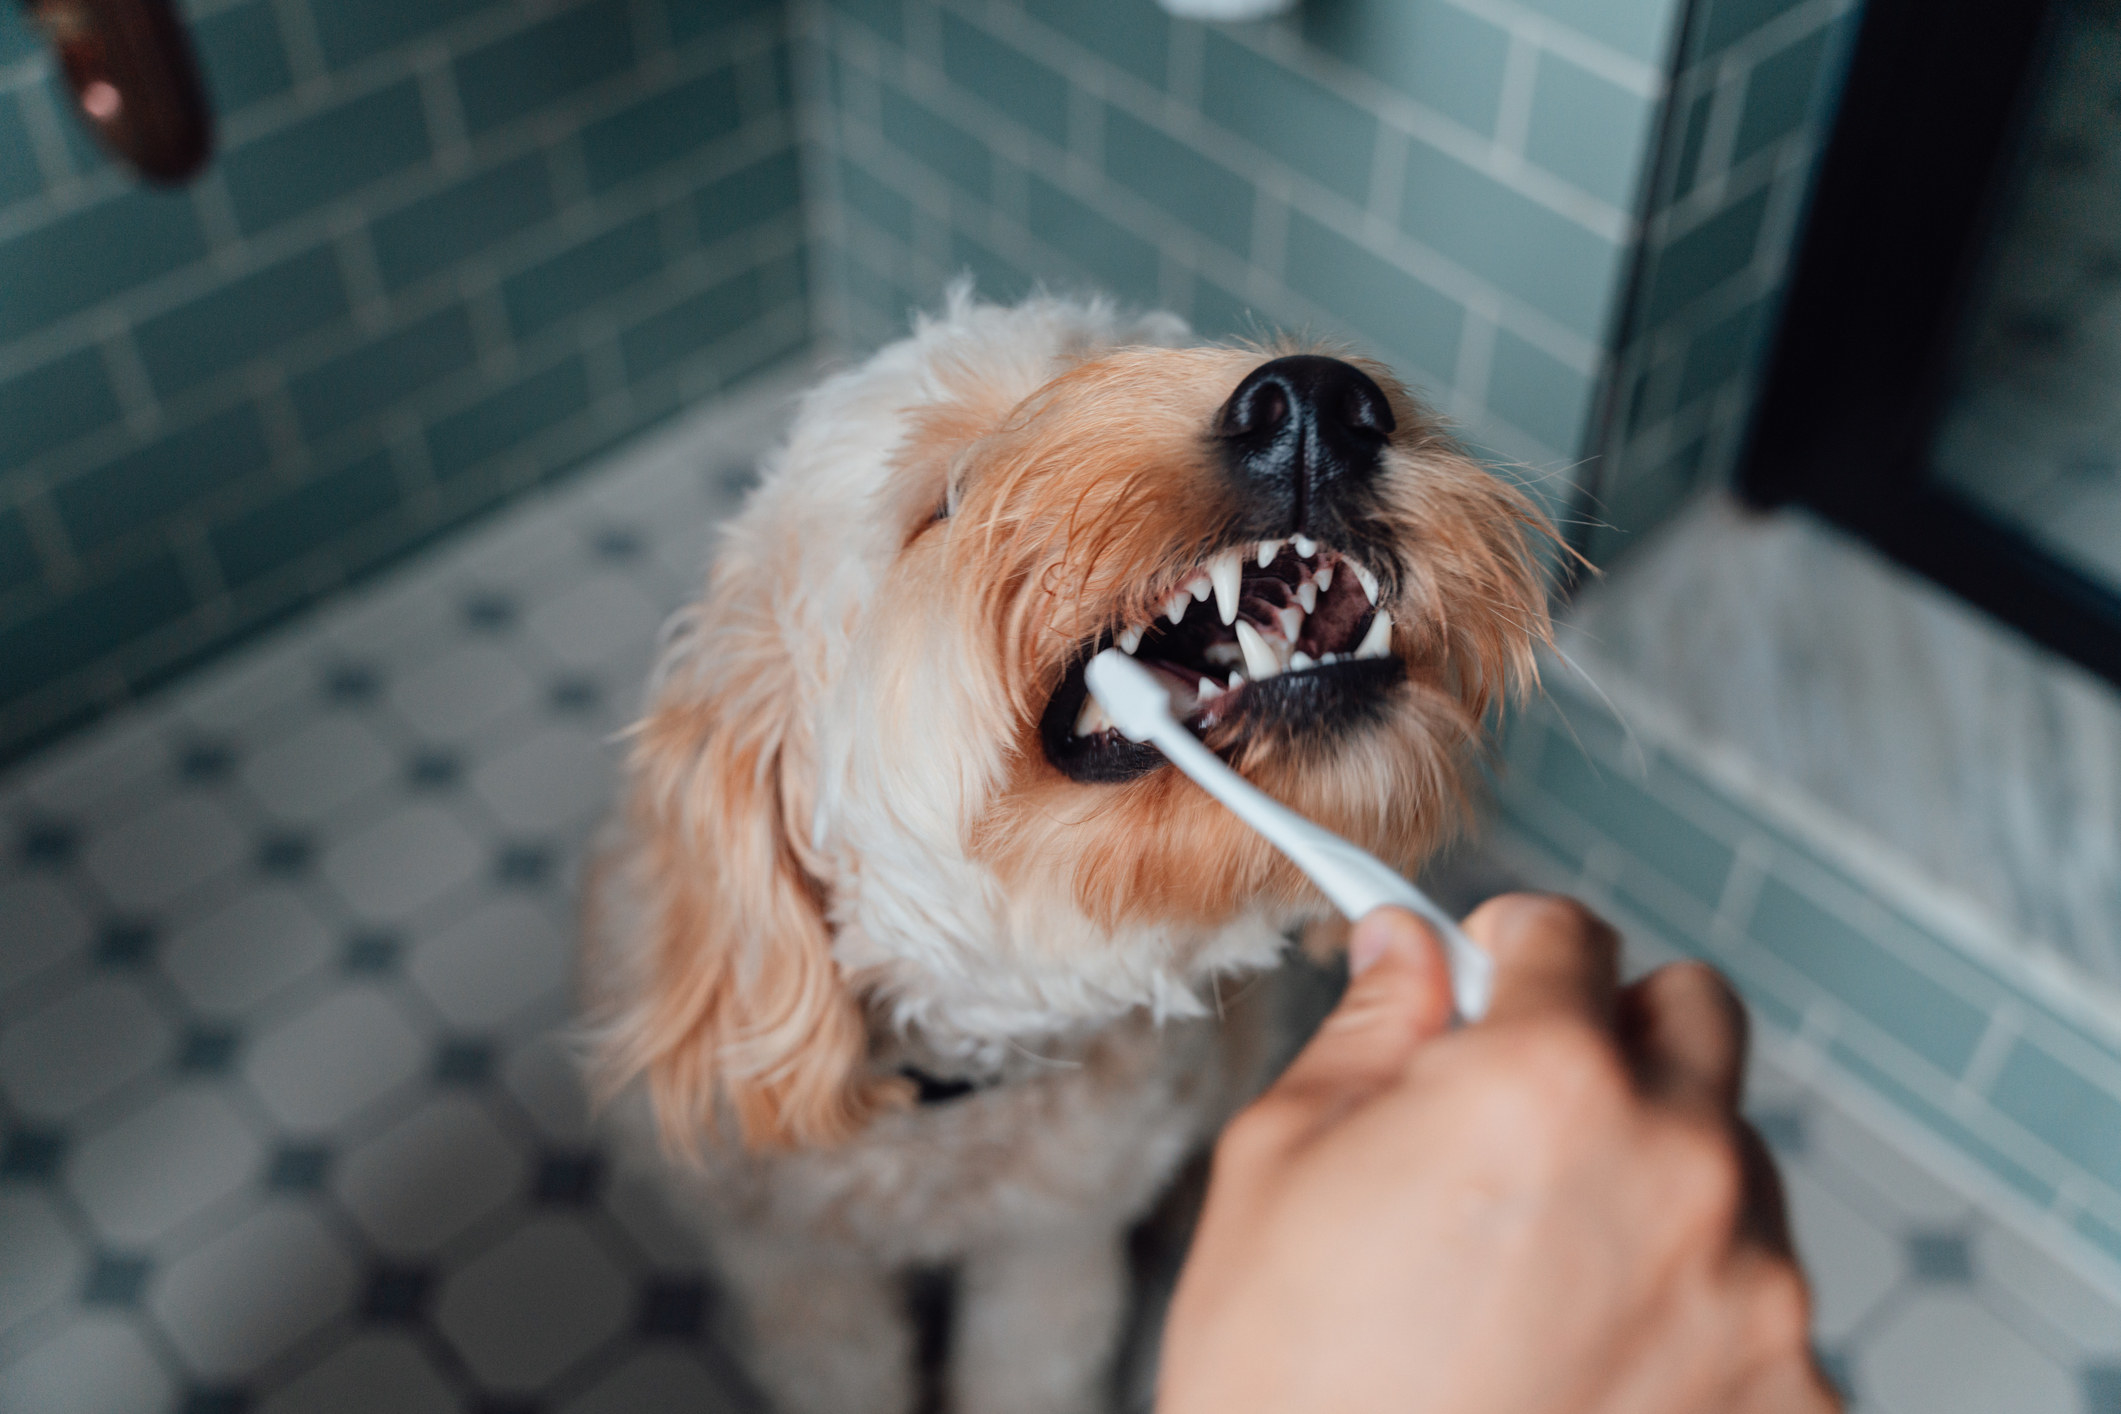 A dog having its teeth brushed.